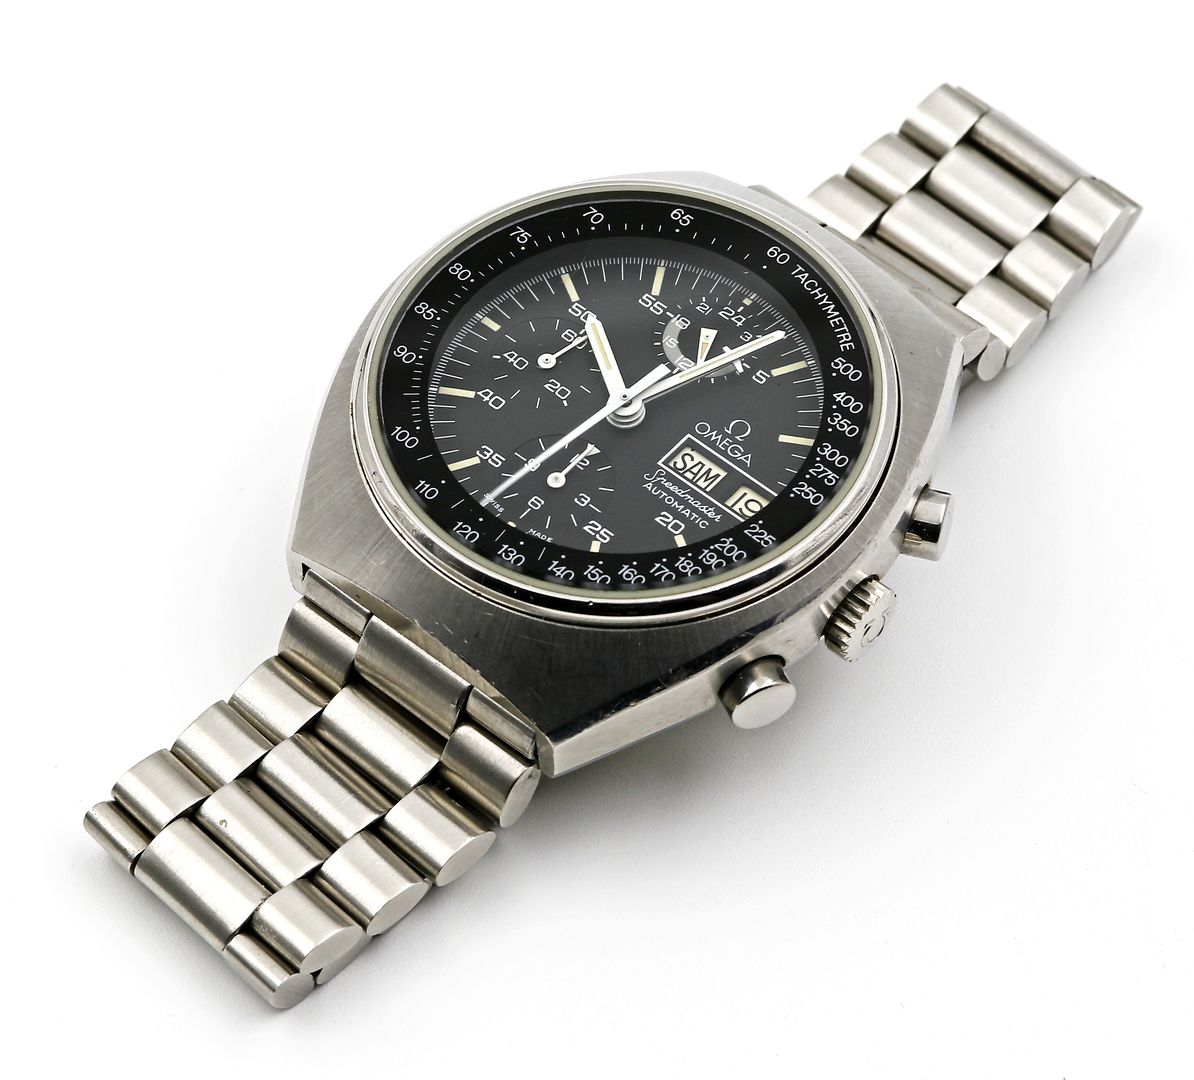 Herren-Armbandchronograph "Speedmaster", Omega.